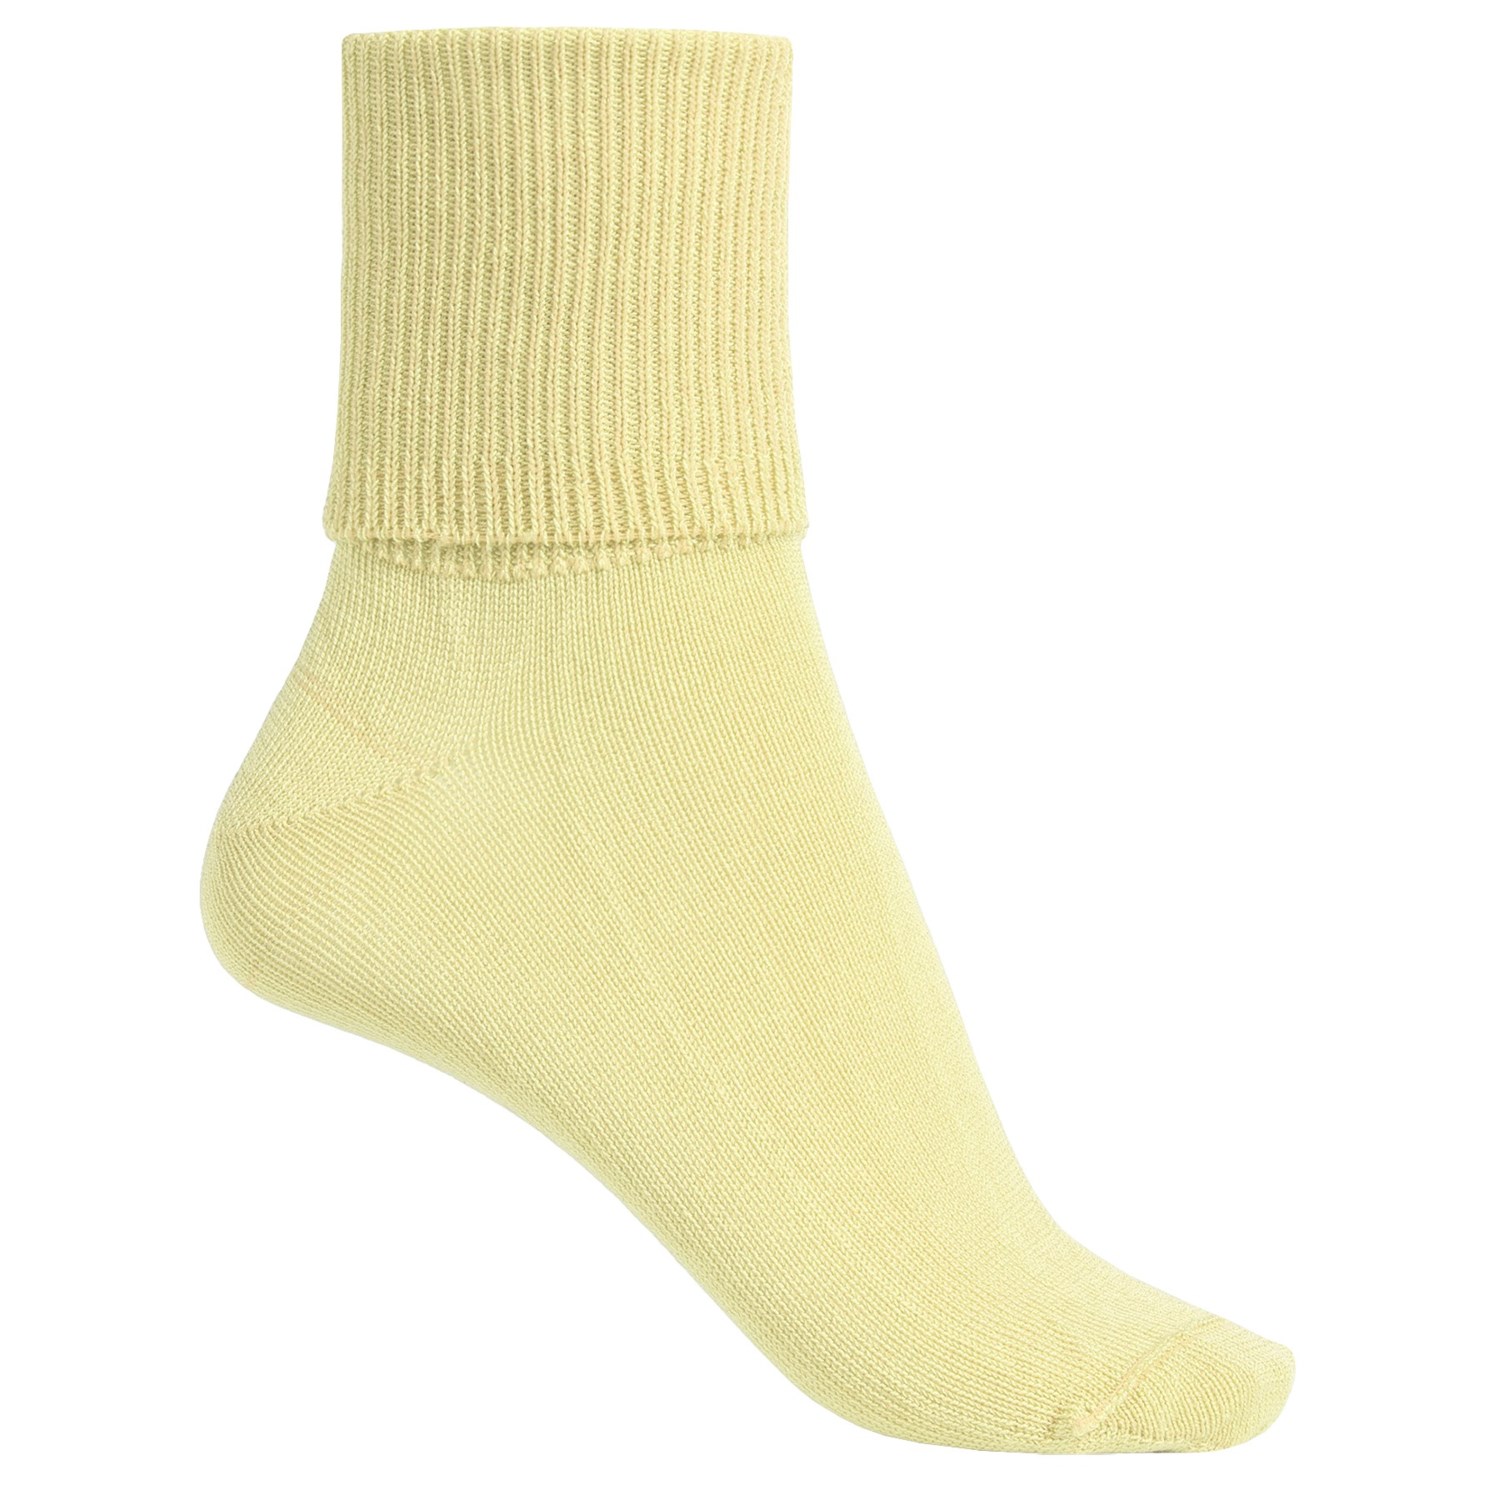 Wigwam Breeze Socks (For Women) 172MK - Save 78%